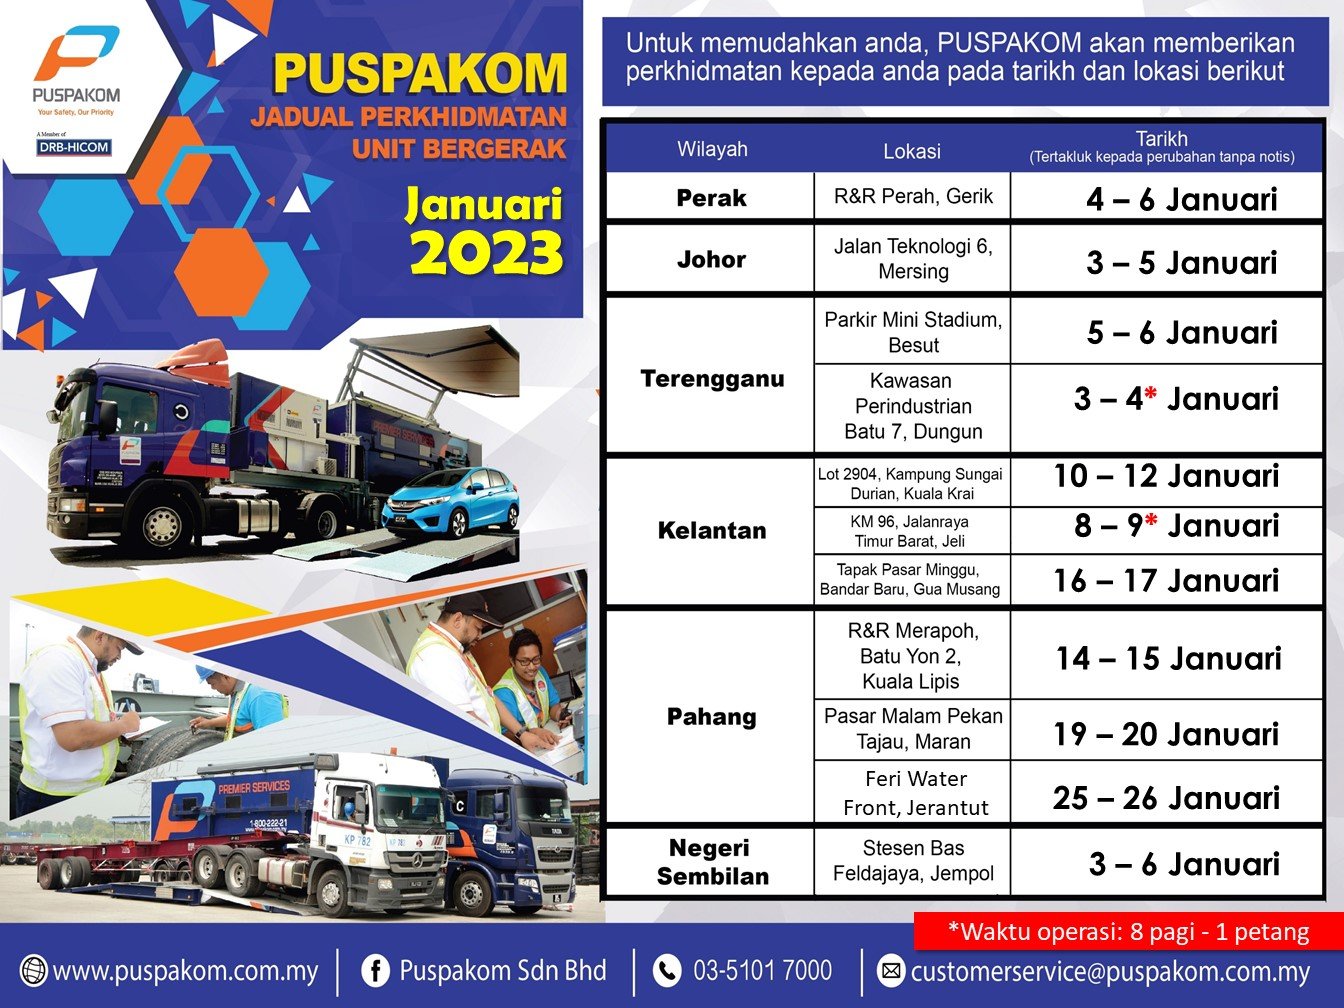 Puspakom-Jan-2023-Mobile-Unit-Schedule-2-BM